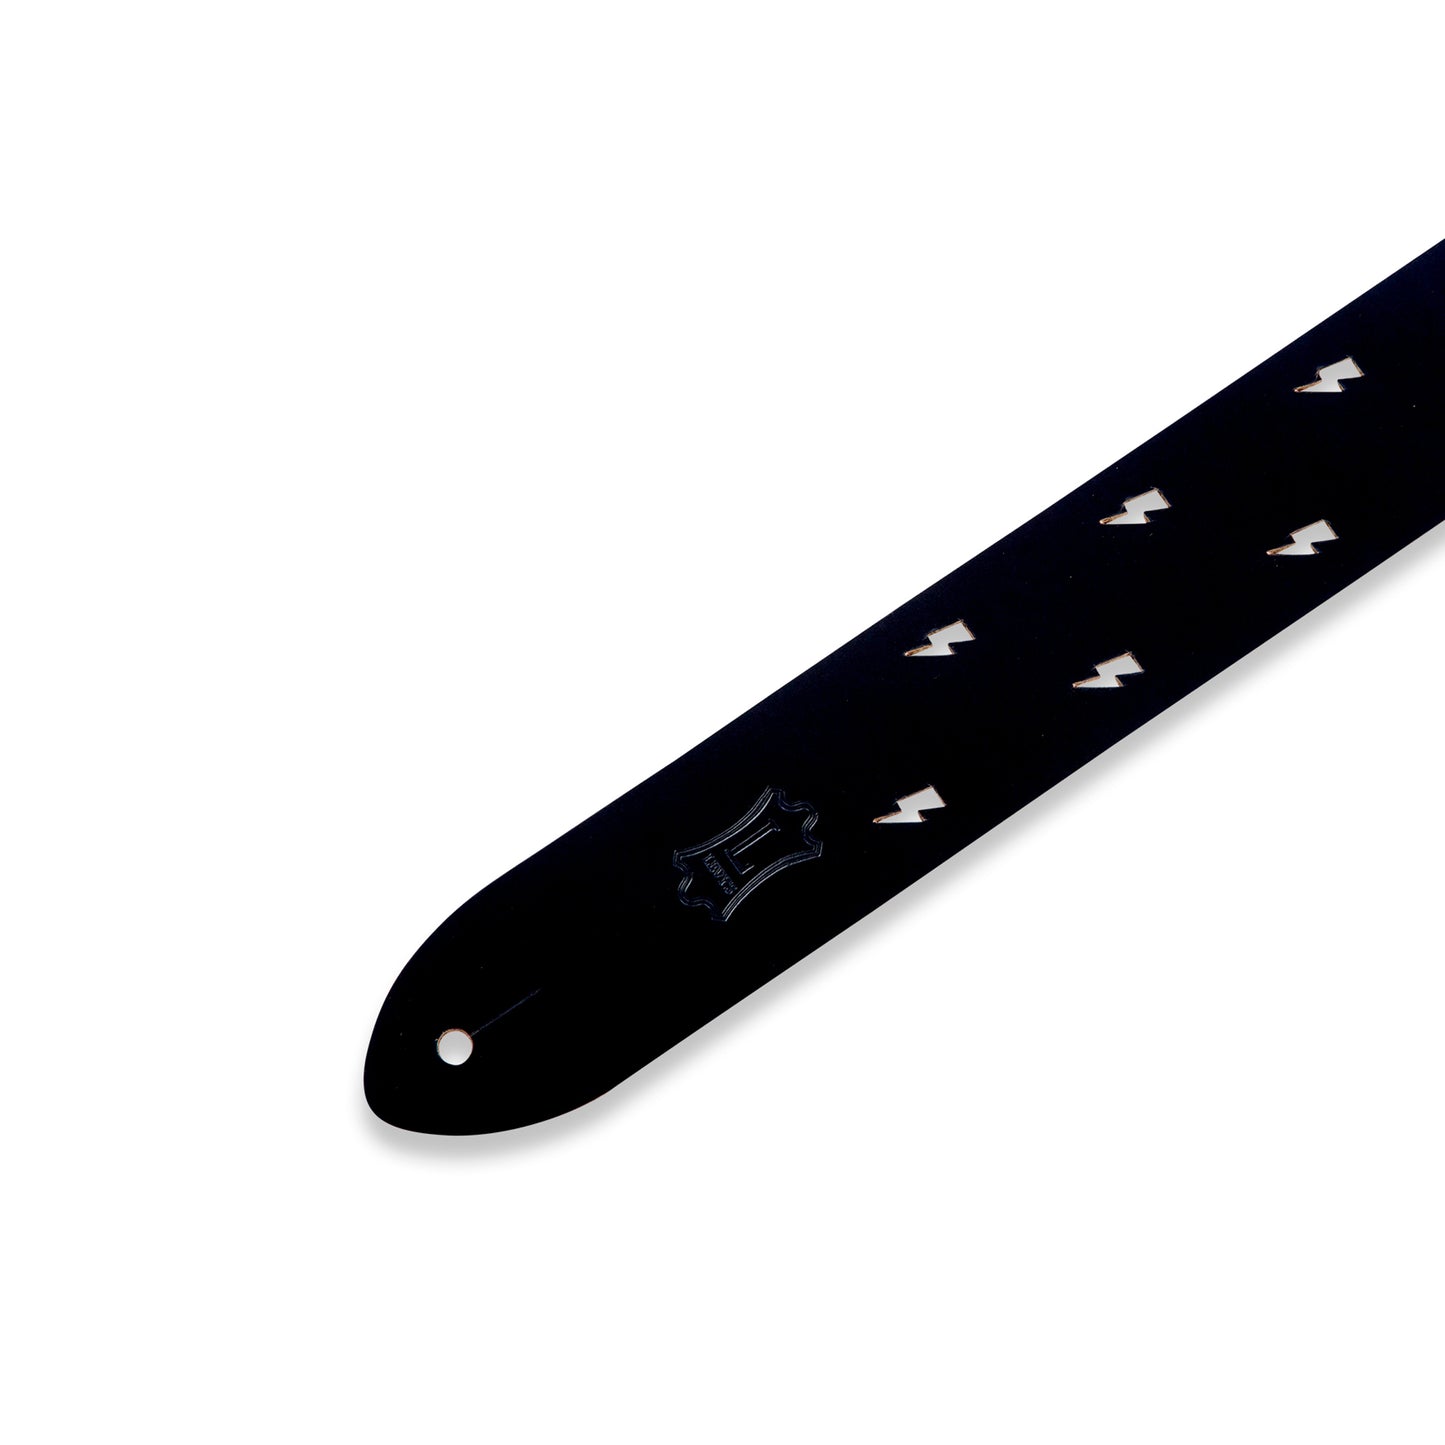 2" Wide Black Chrome-tan Leather Guitar Strap